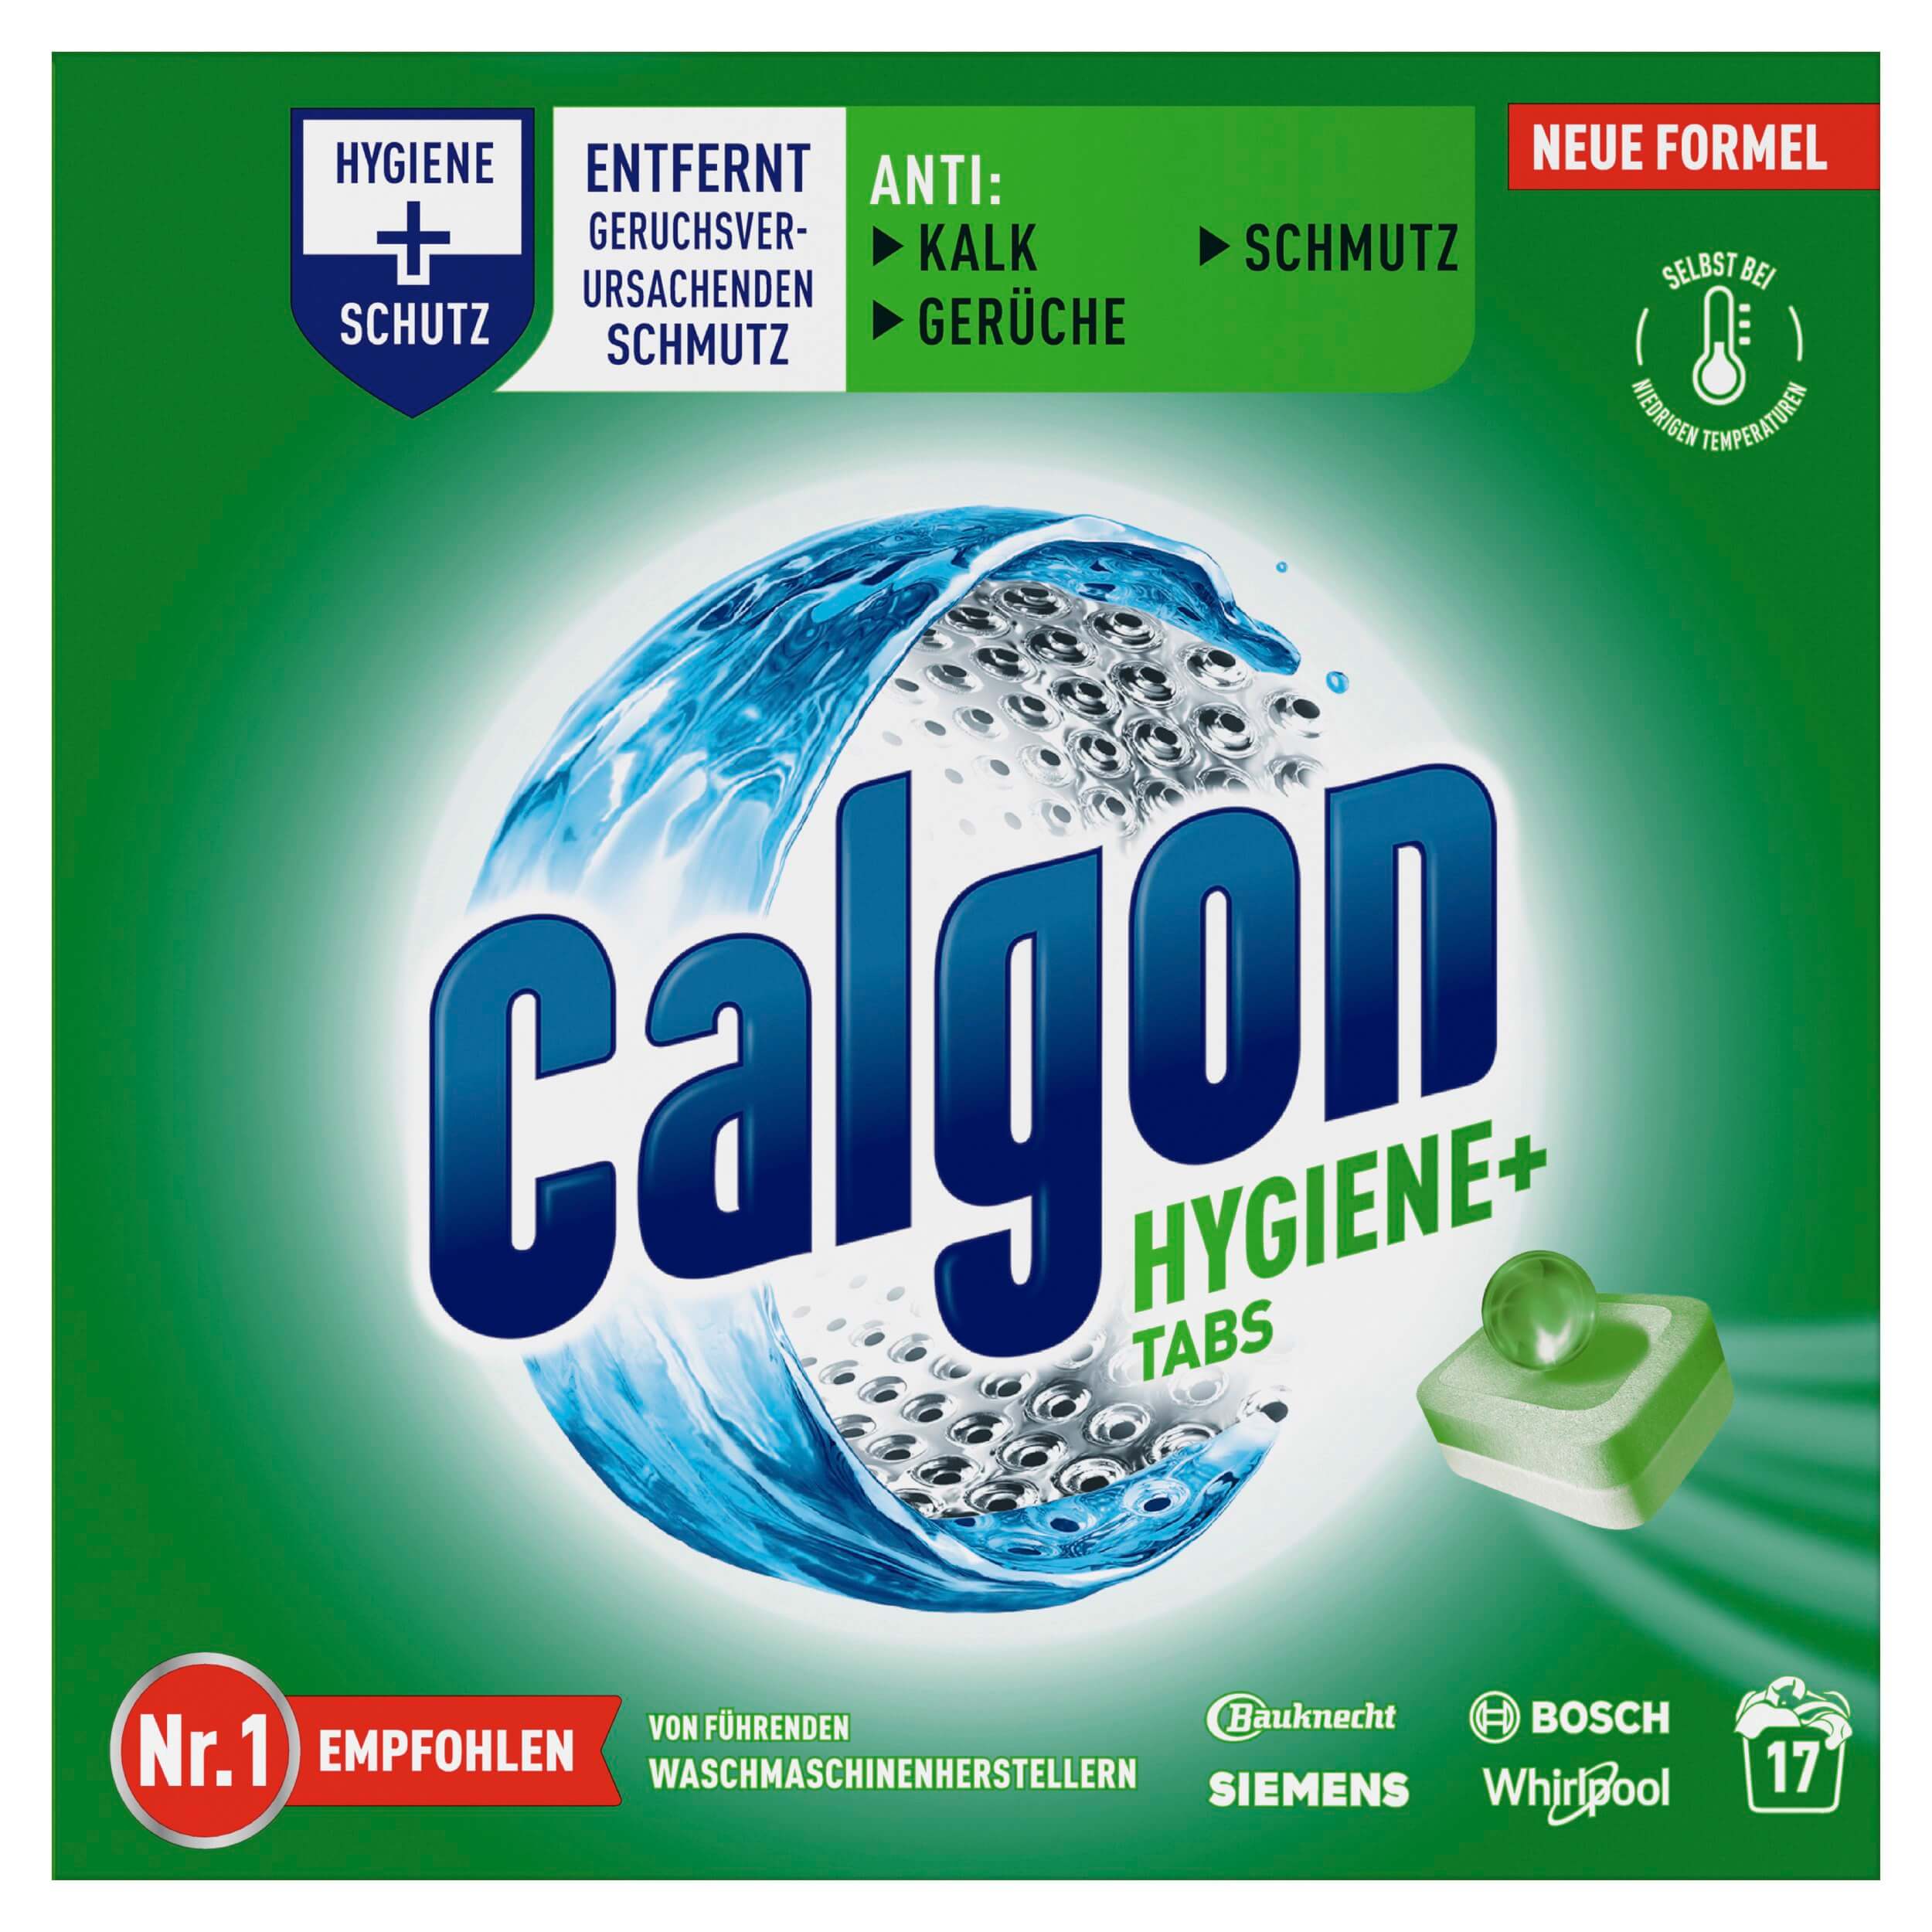 Calgon Hygiene + Tabs 17 Stück